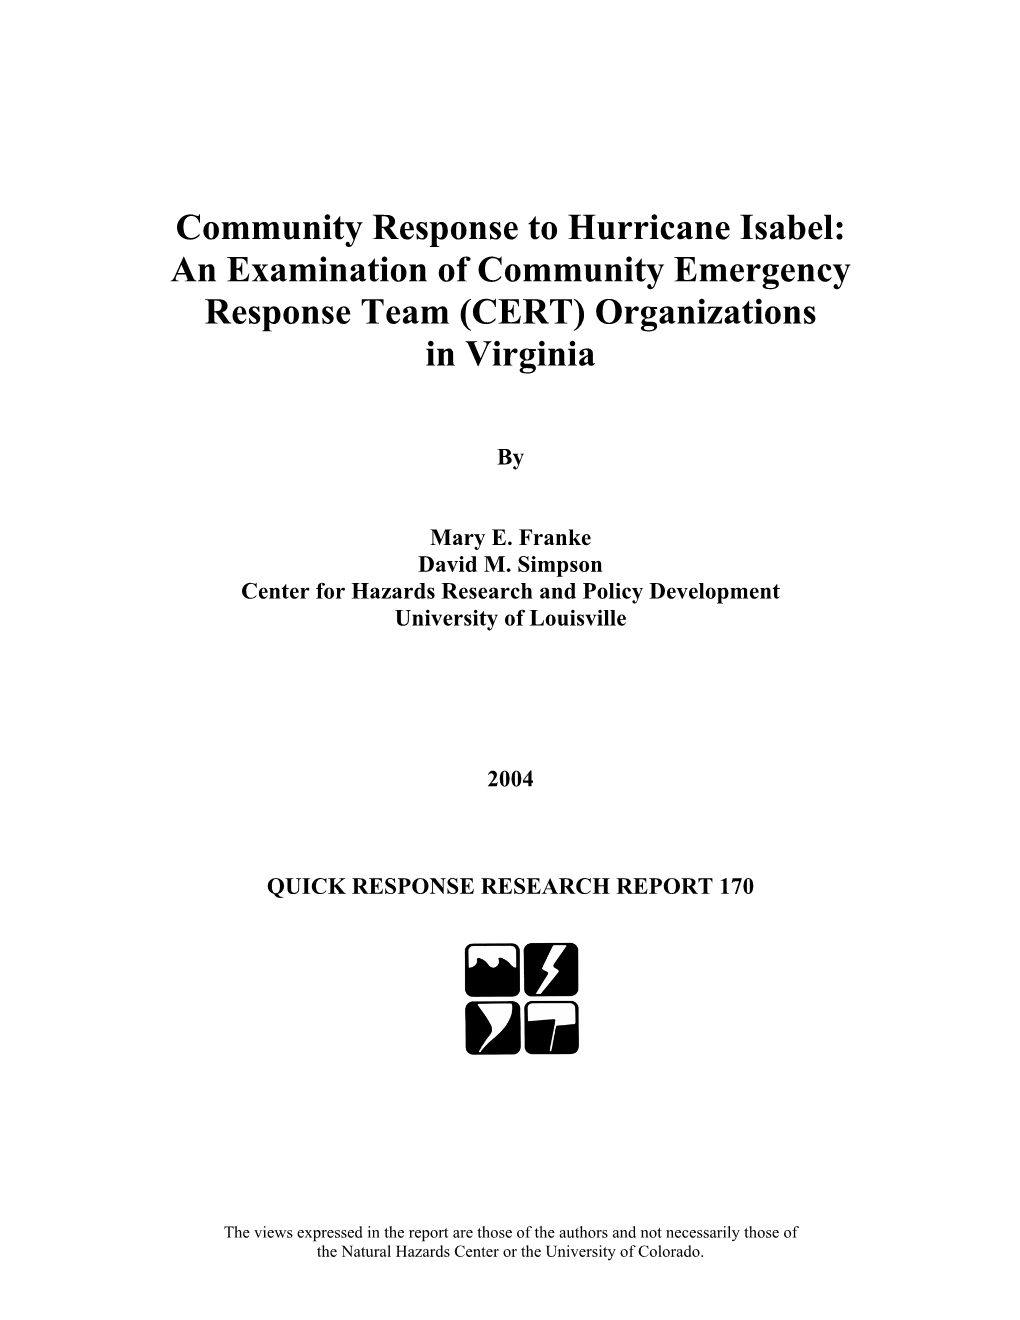 An Examination of Community Emergency Response Team (CERT) Organizations in Virginia